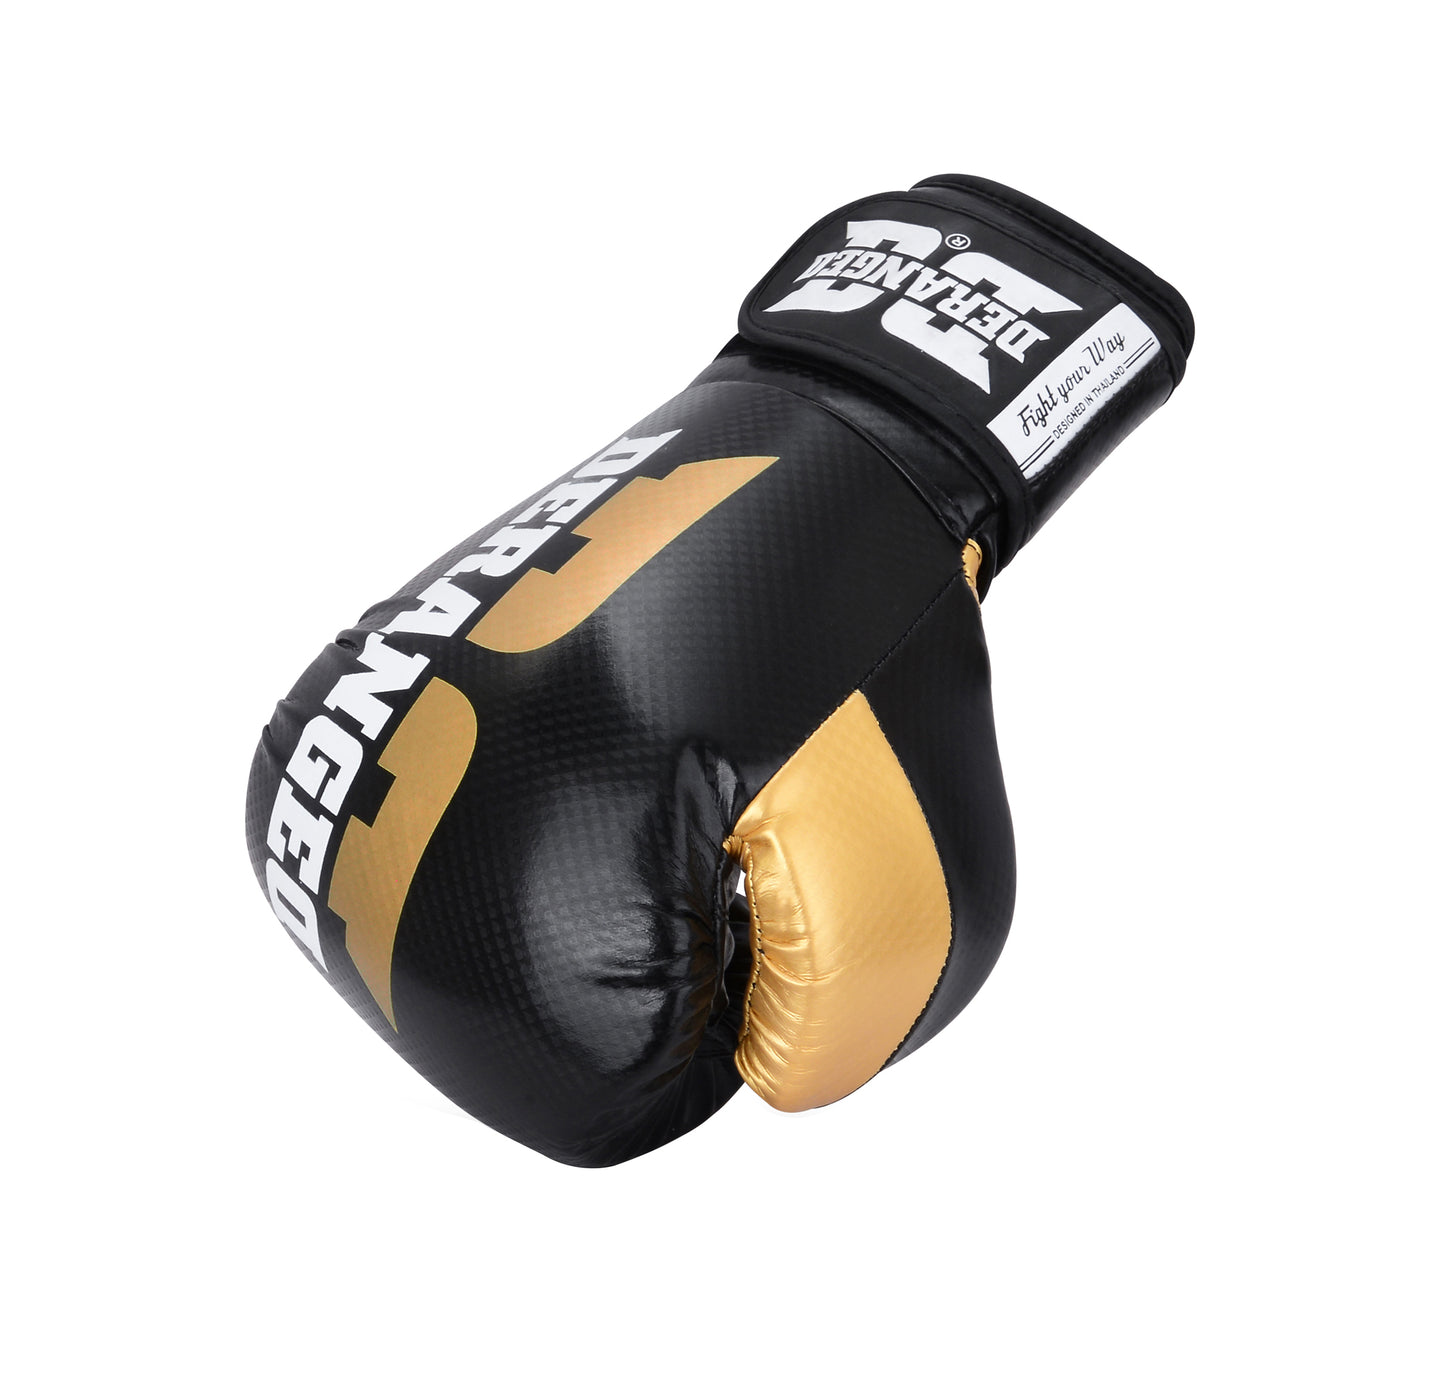 DERANGED Boxing Gloves Black Carbon